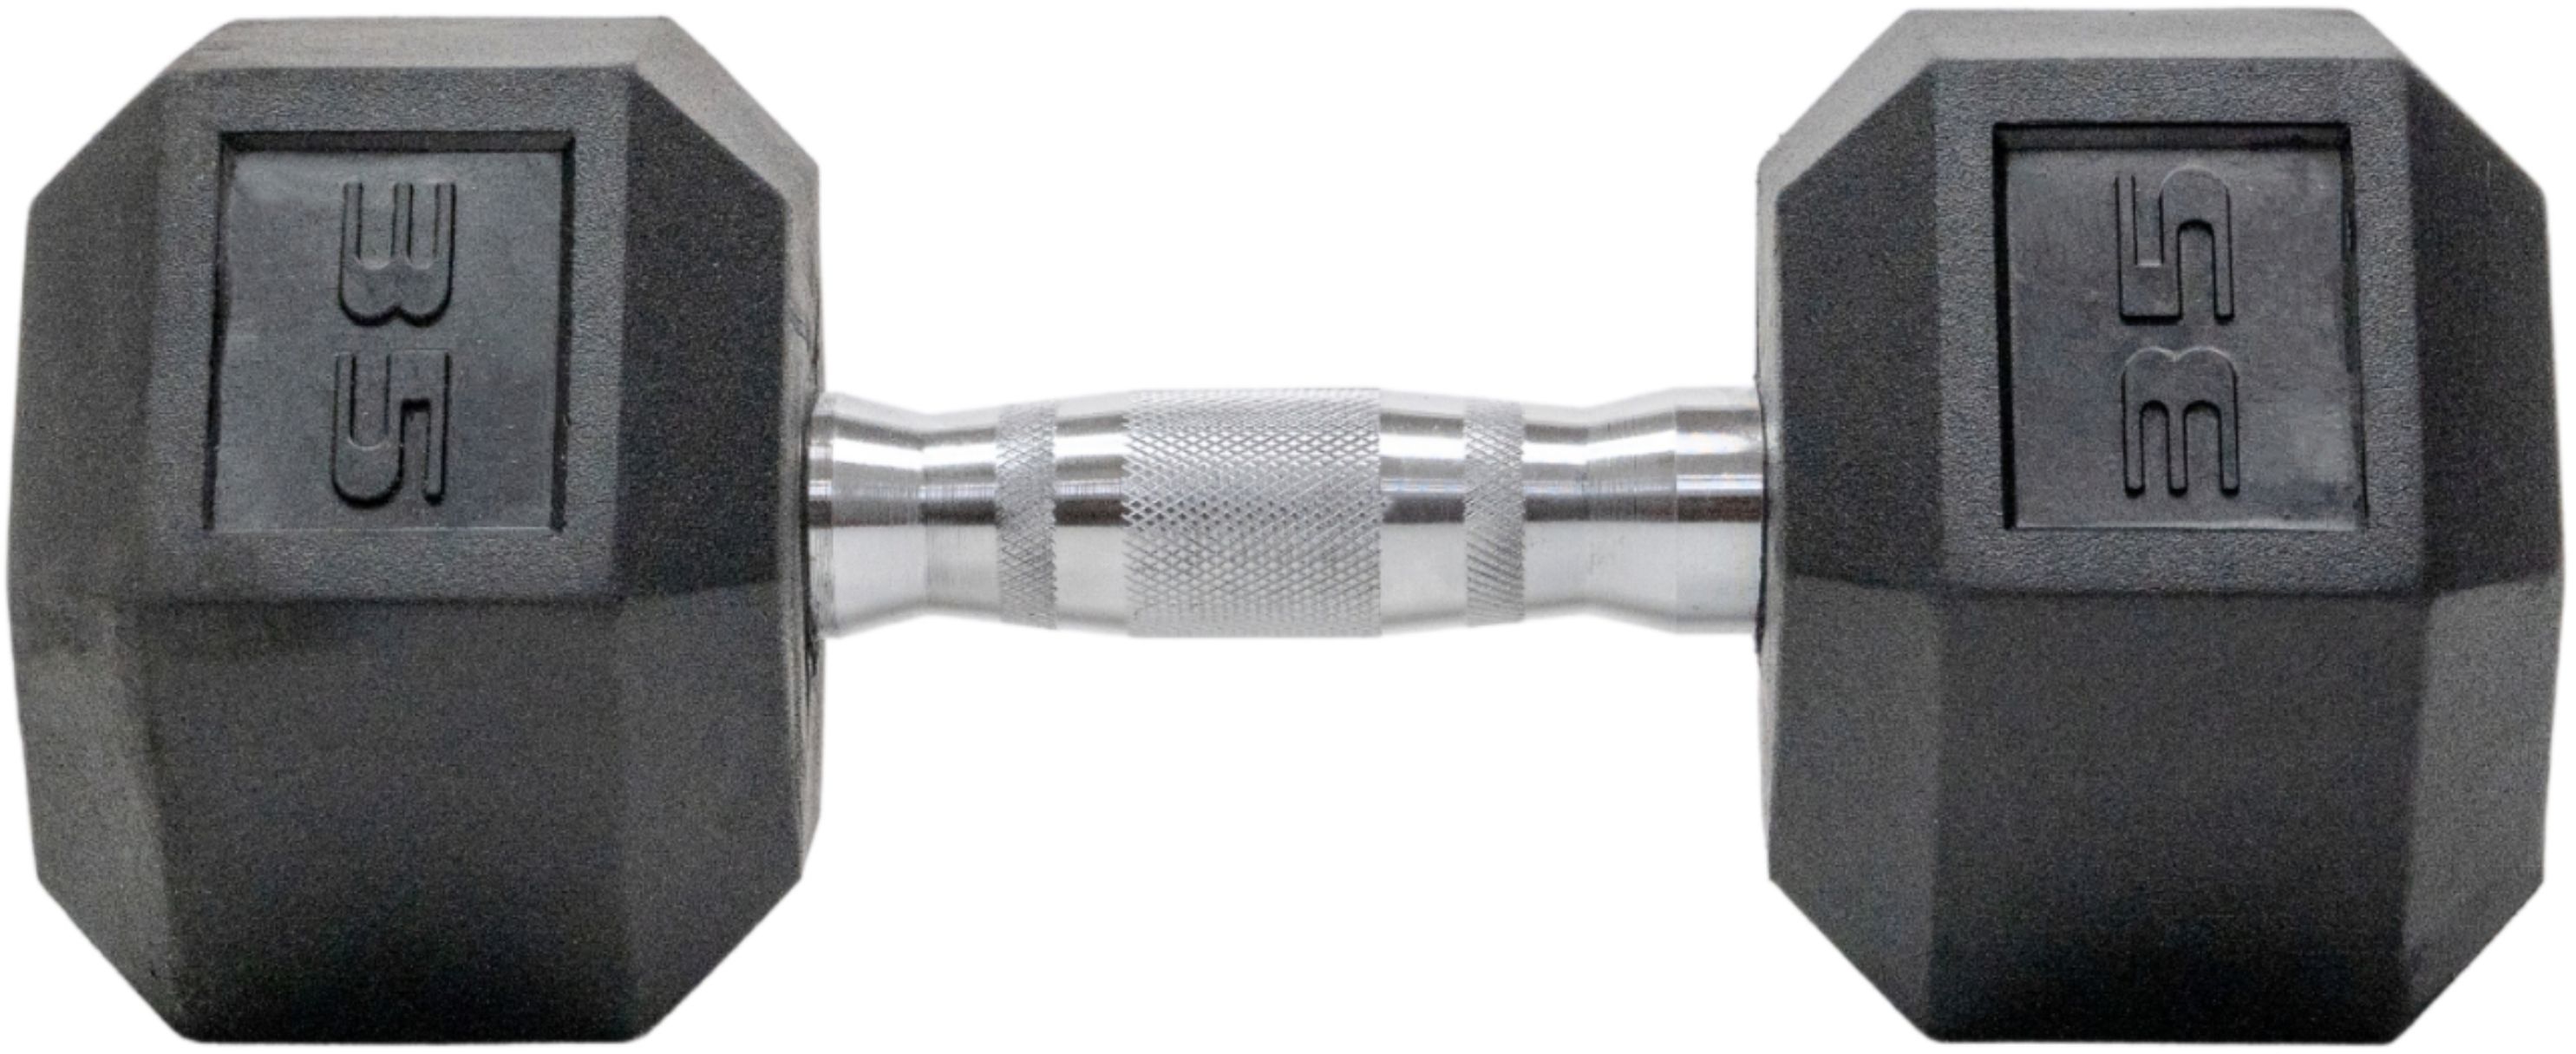 Tru Grit - 35-lb Hex Rubber Coated Dumbbell Single - Black/Silver